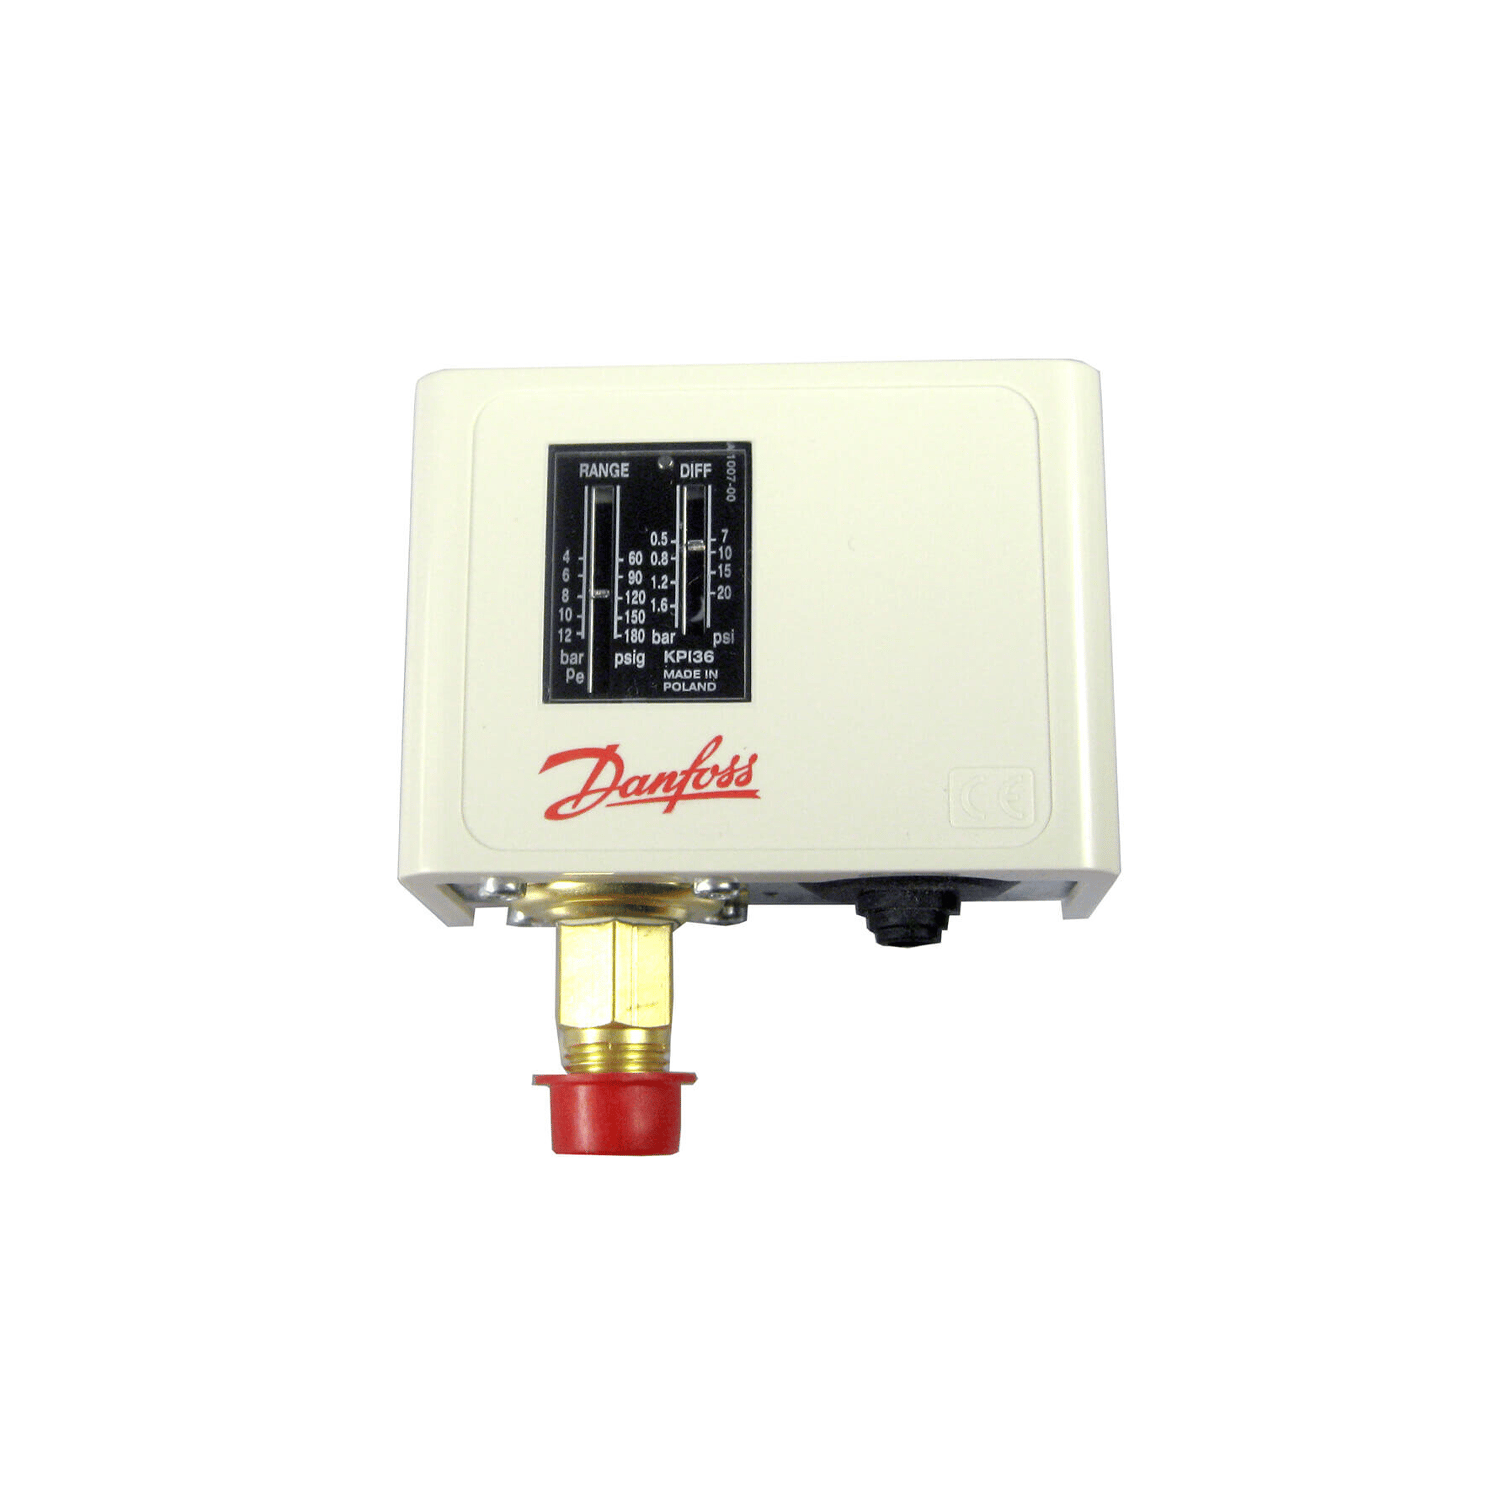 Pressure switch Danfoss KP36 060-110866